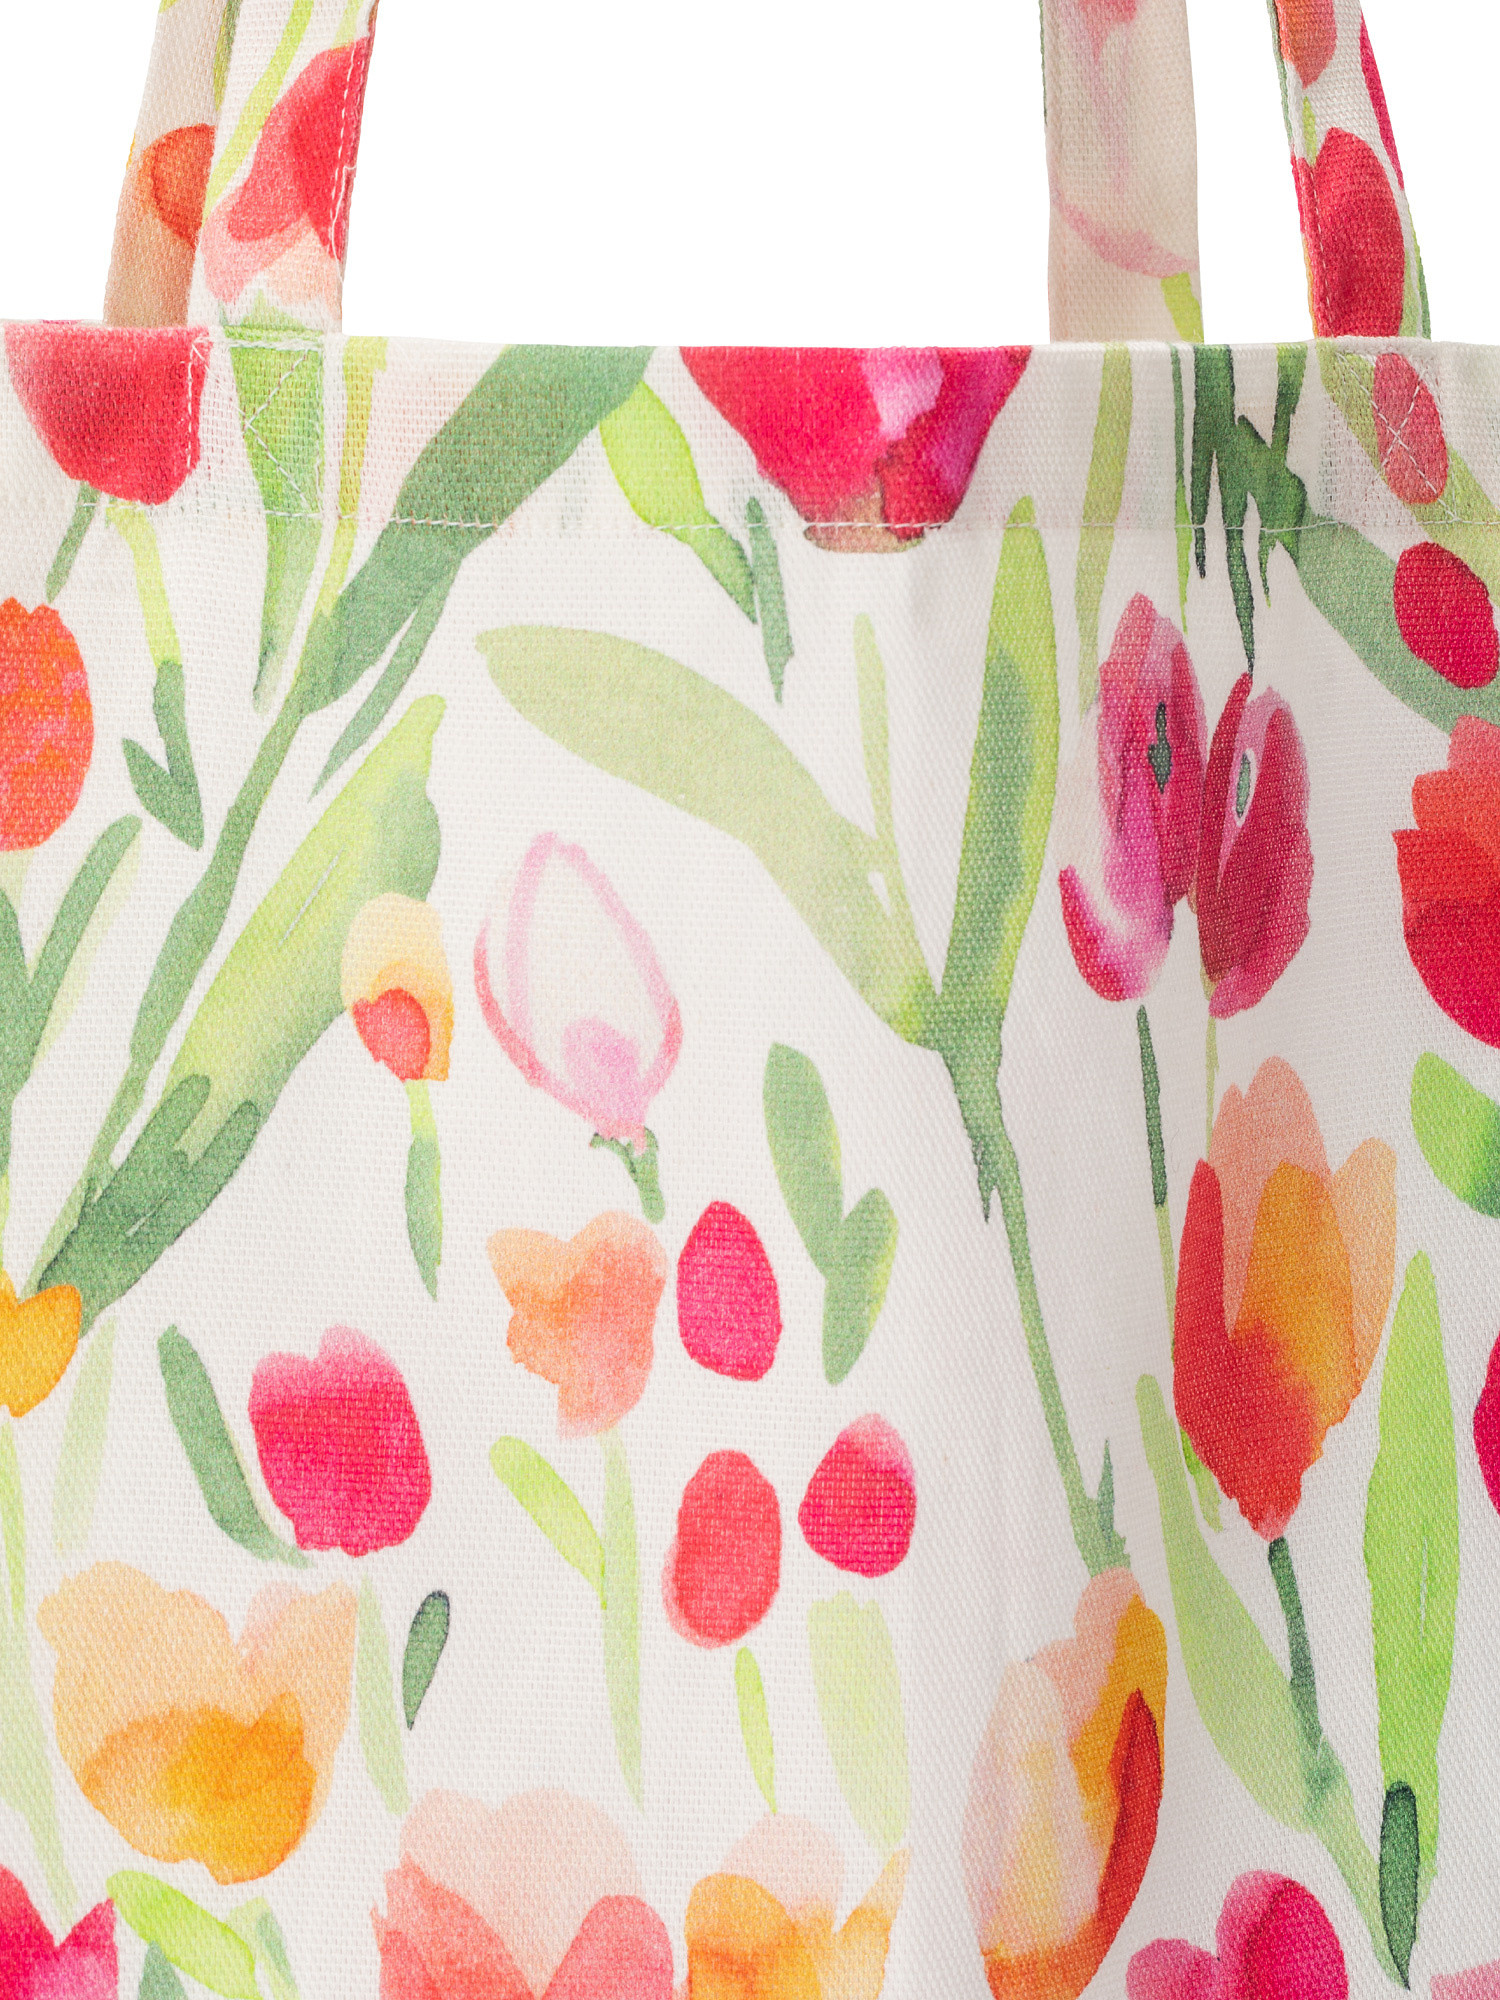 Borsa puro cotone stampa tulipani, Multicolor, large image number 2